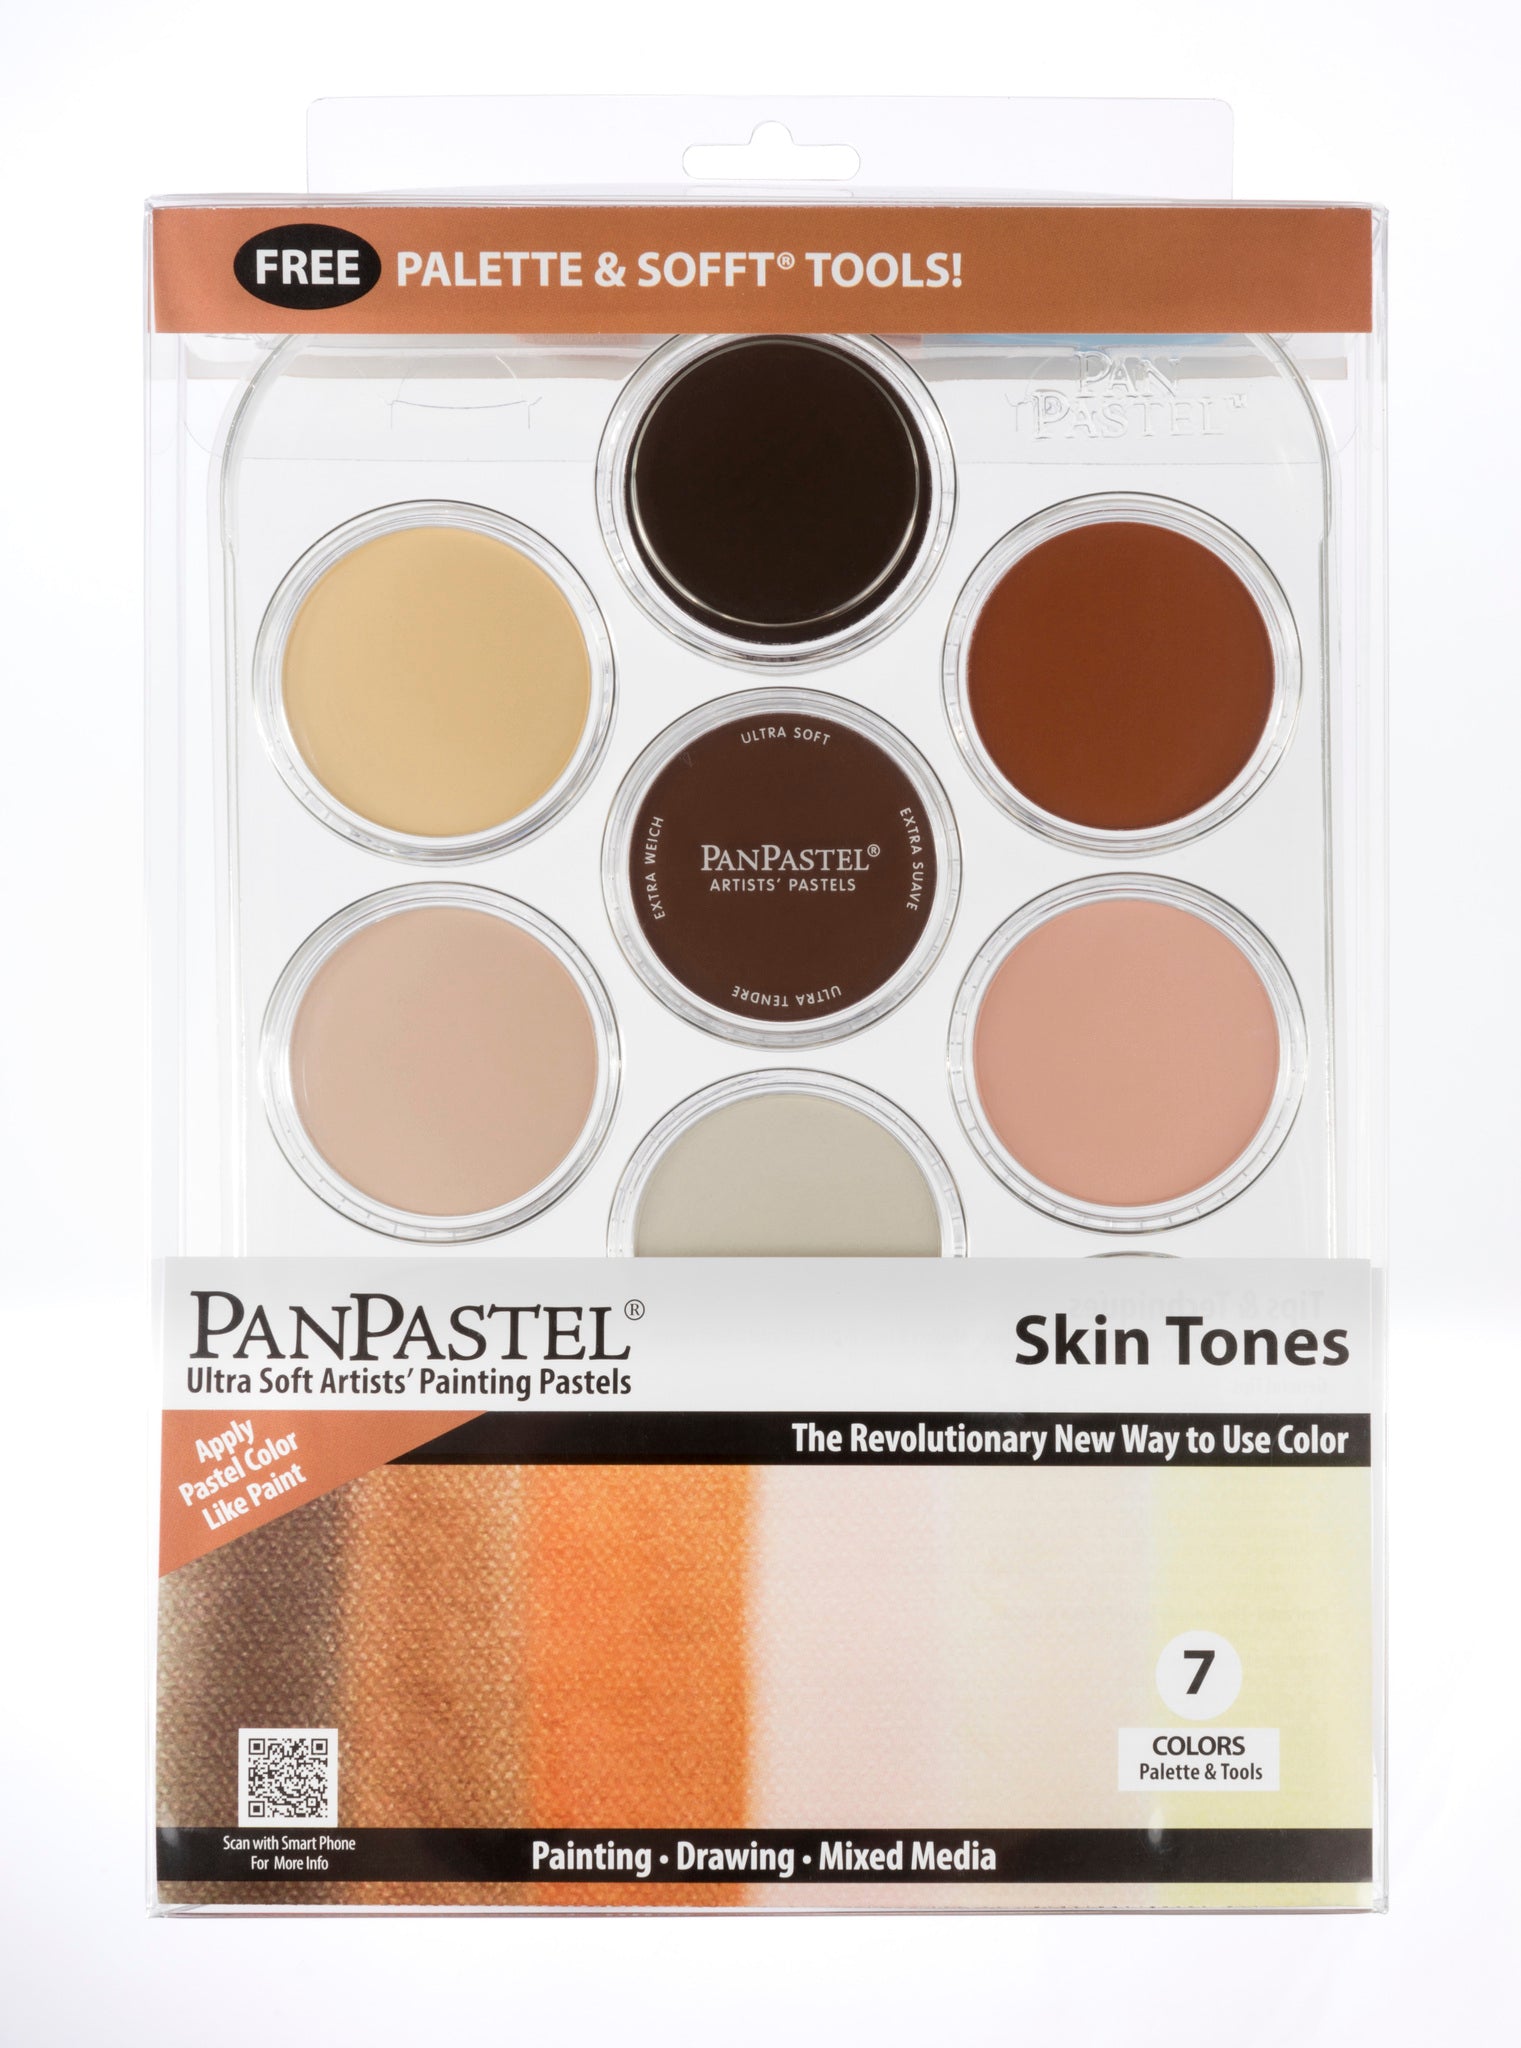 PanPastel 30081 Skin Tones Palette Set 7 Pans, Sofft Tools & Tray